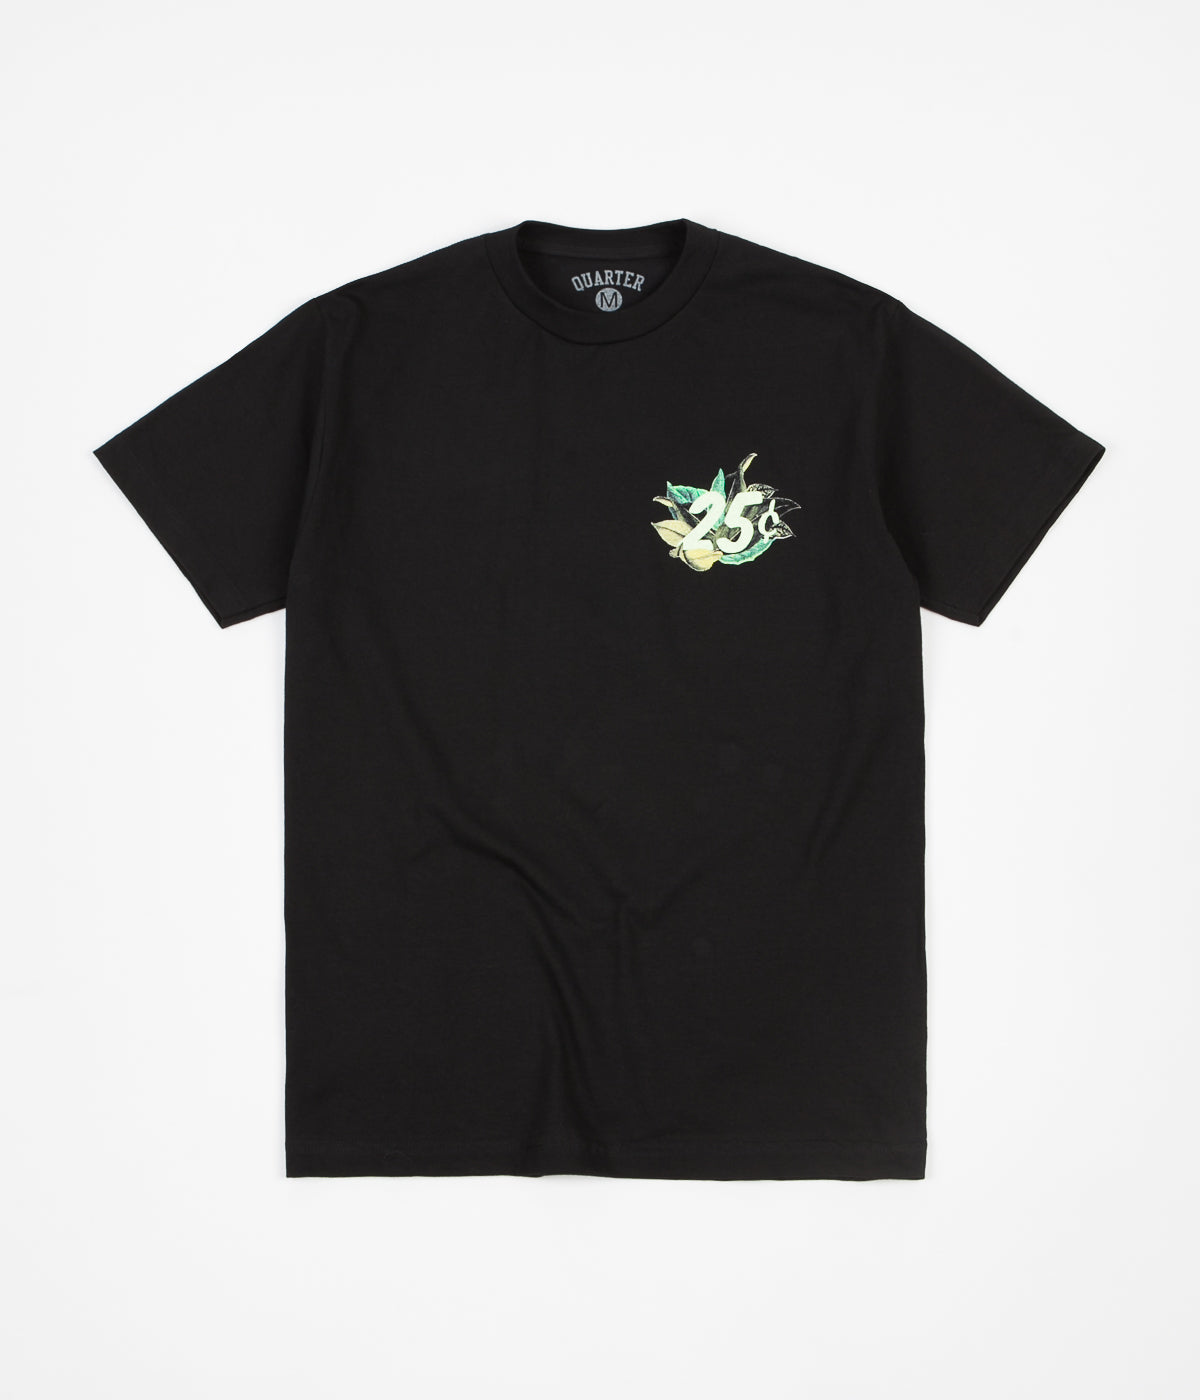 Quartersnacks Botanical Snackman T-Shirt - Black | Flatspot